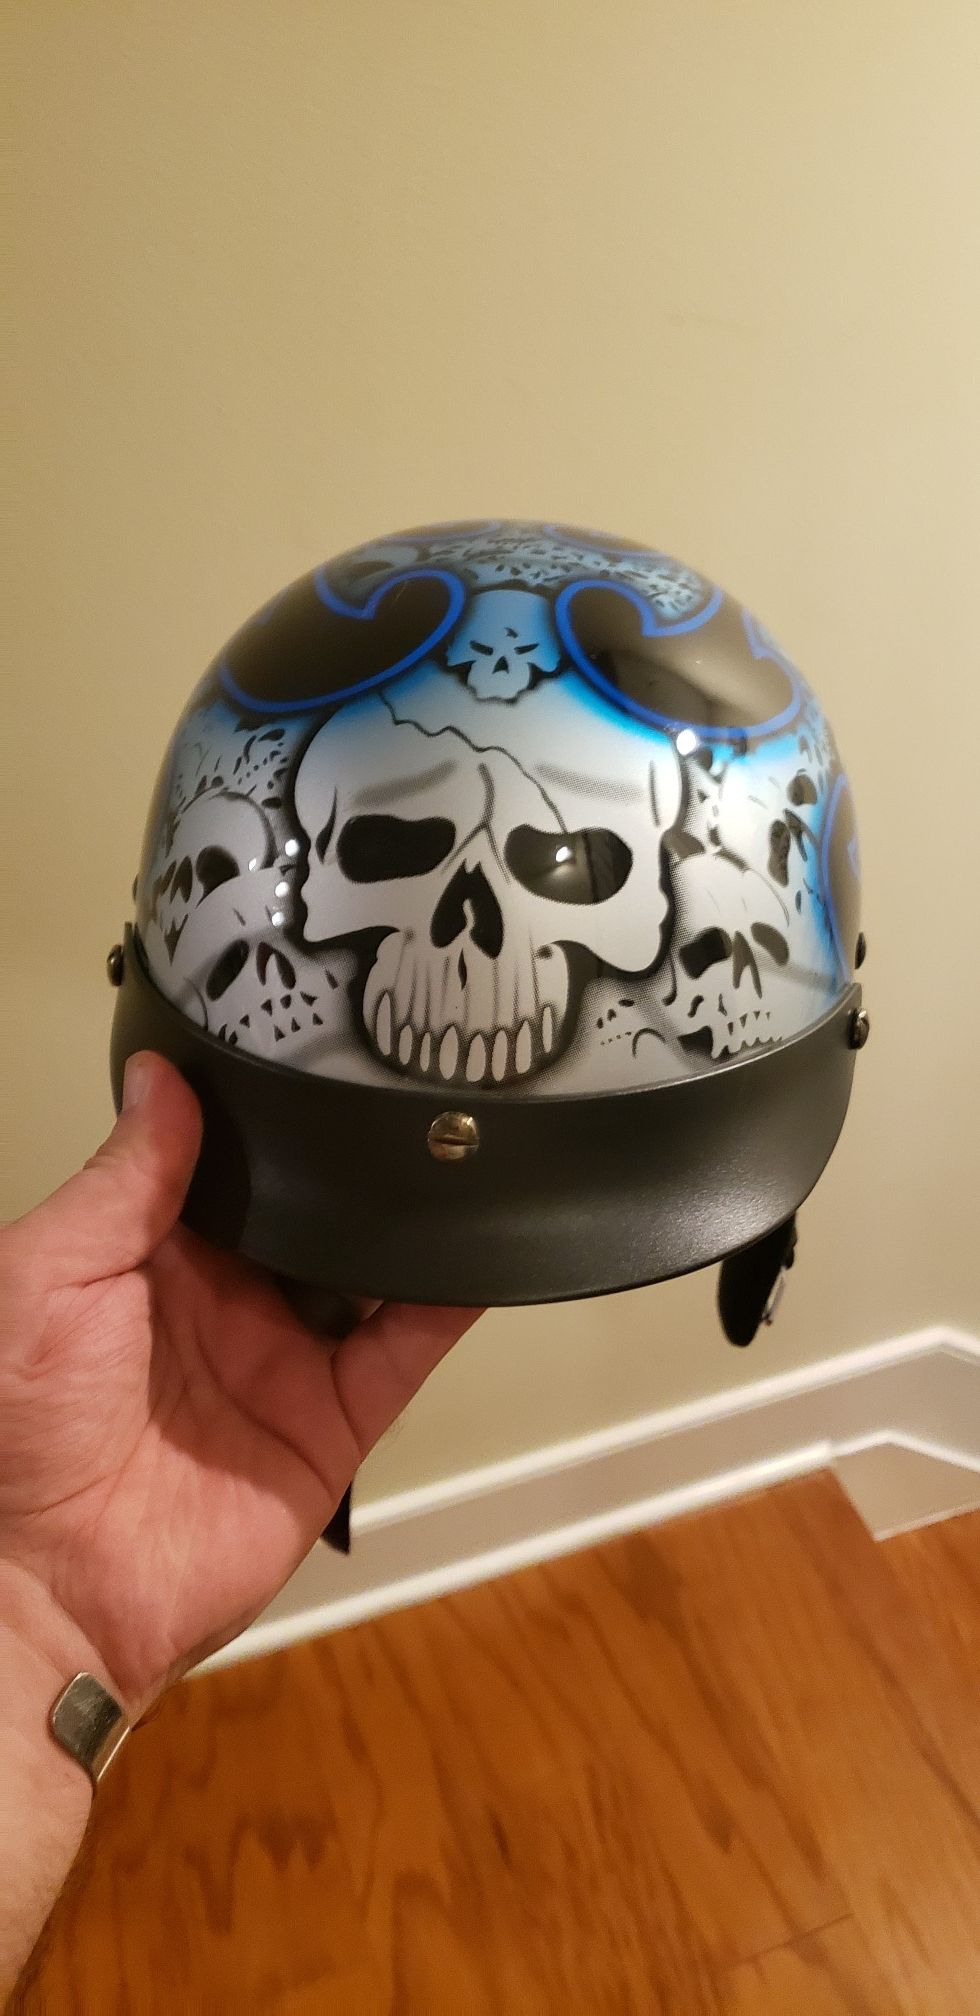 Motorcycle Helmet, skullcap, great looking!